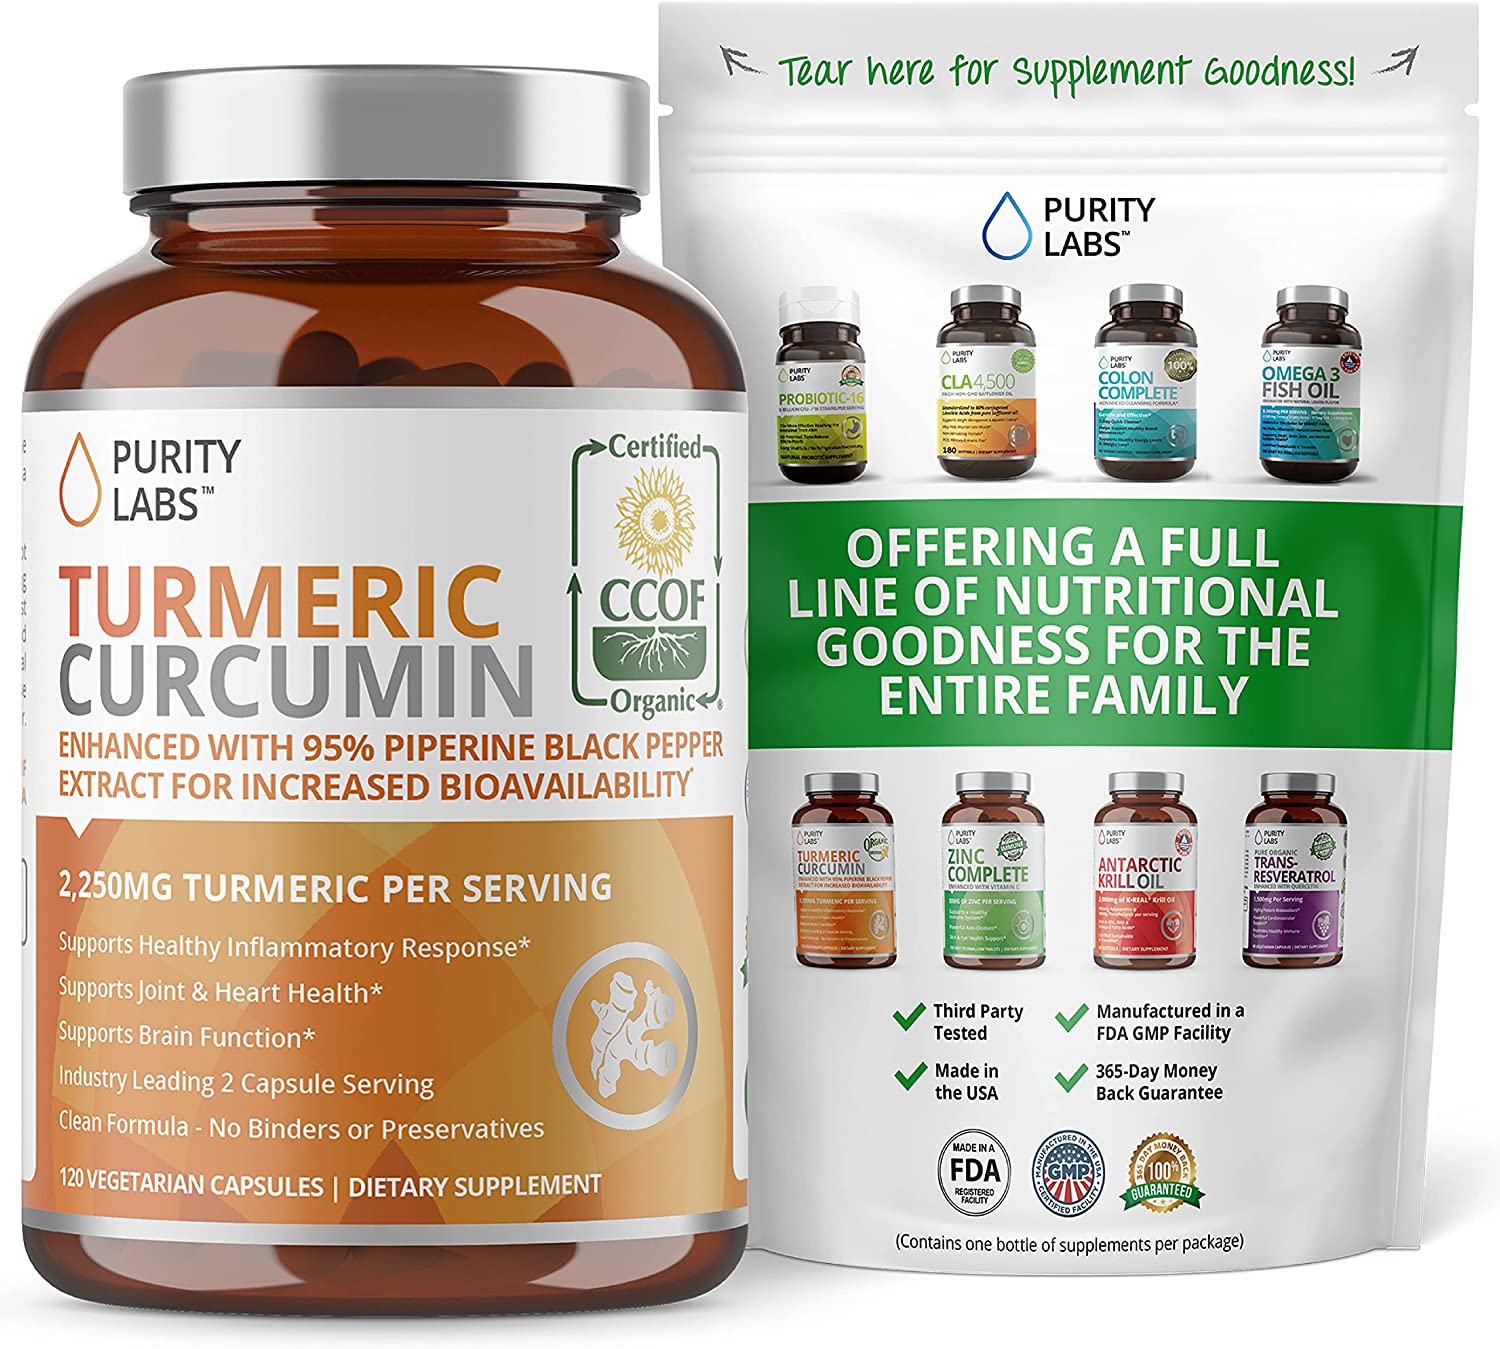 Certified Organic Turmeric Curcumin